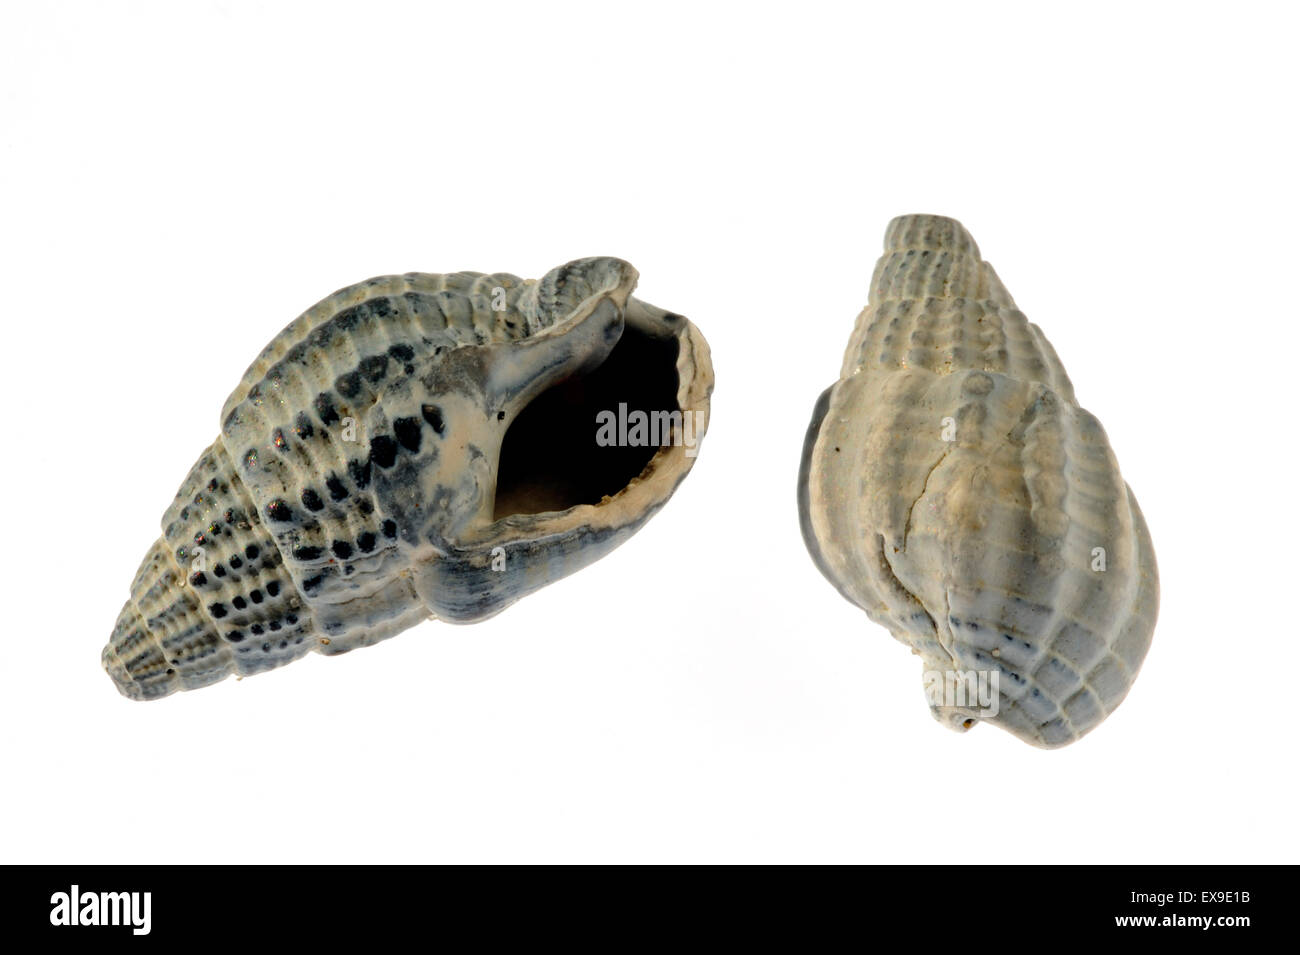 Netted dog whelk (Nassarius reticulatus / Hinia reticulata) fossils on white background Stock Photo